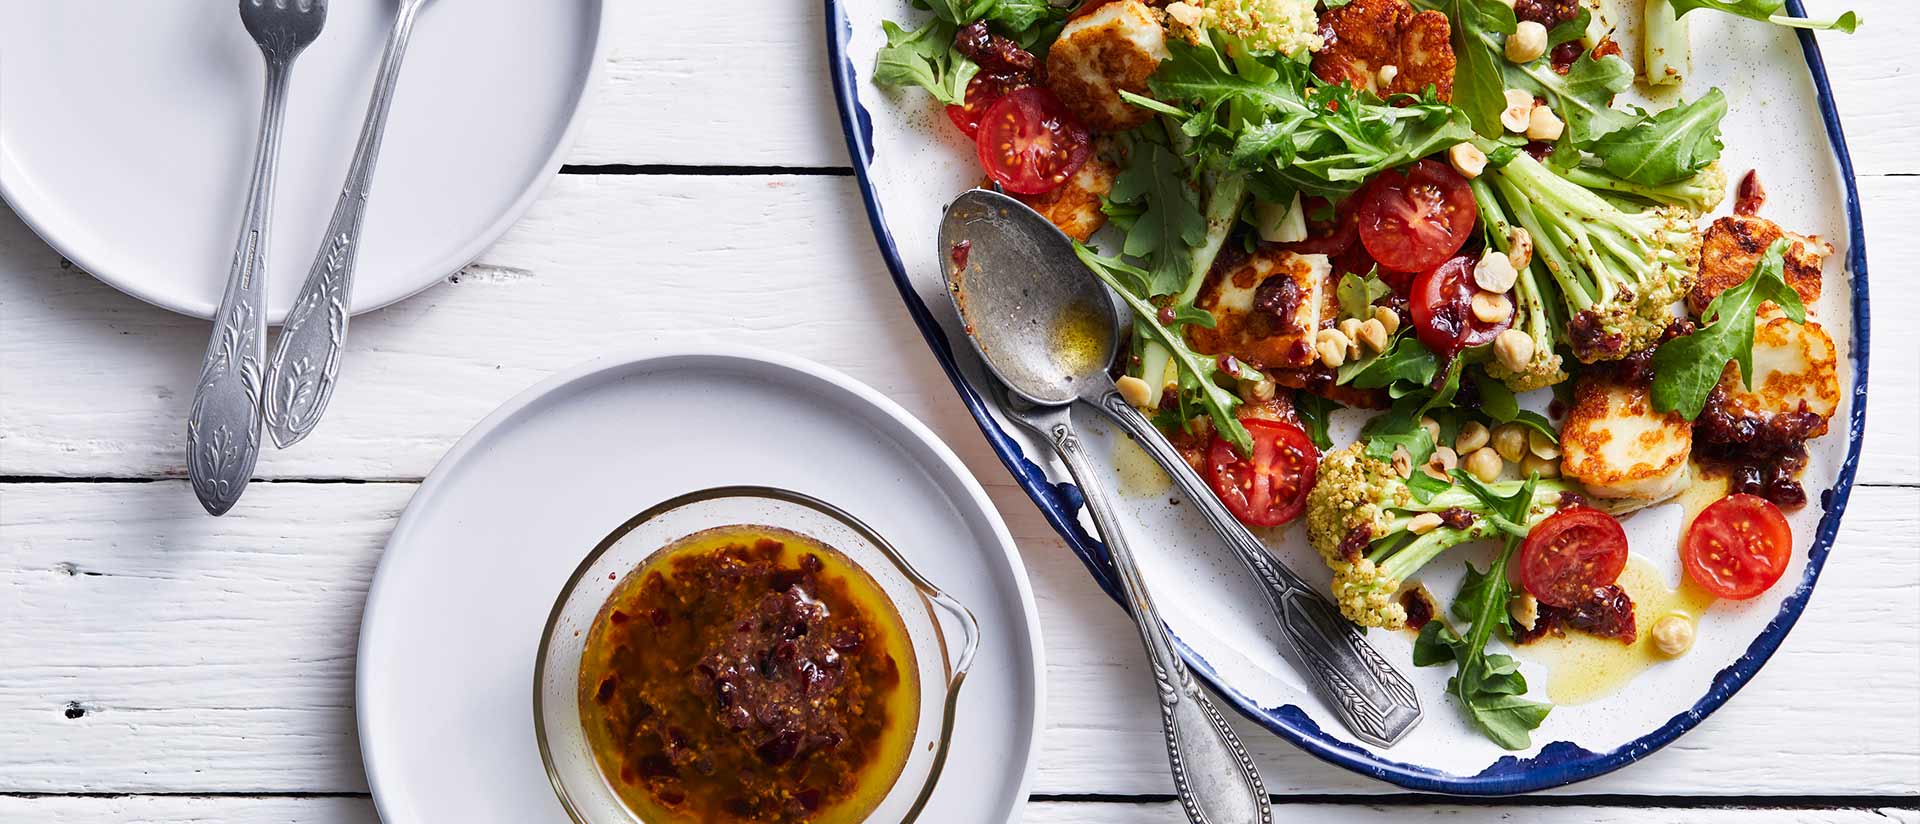 Roasted Fioretto Haloumi Salad With Cranberry Vinaigrette Recipe